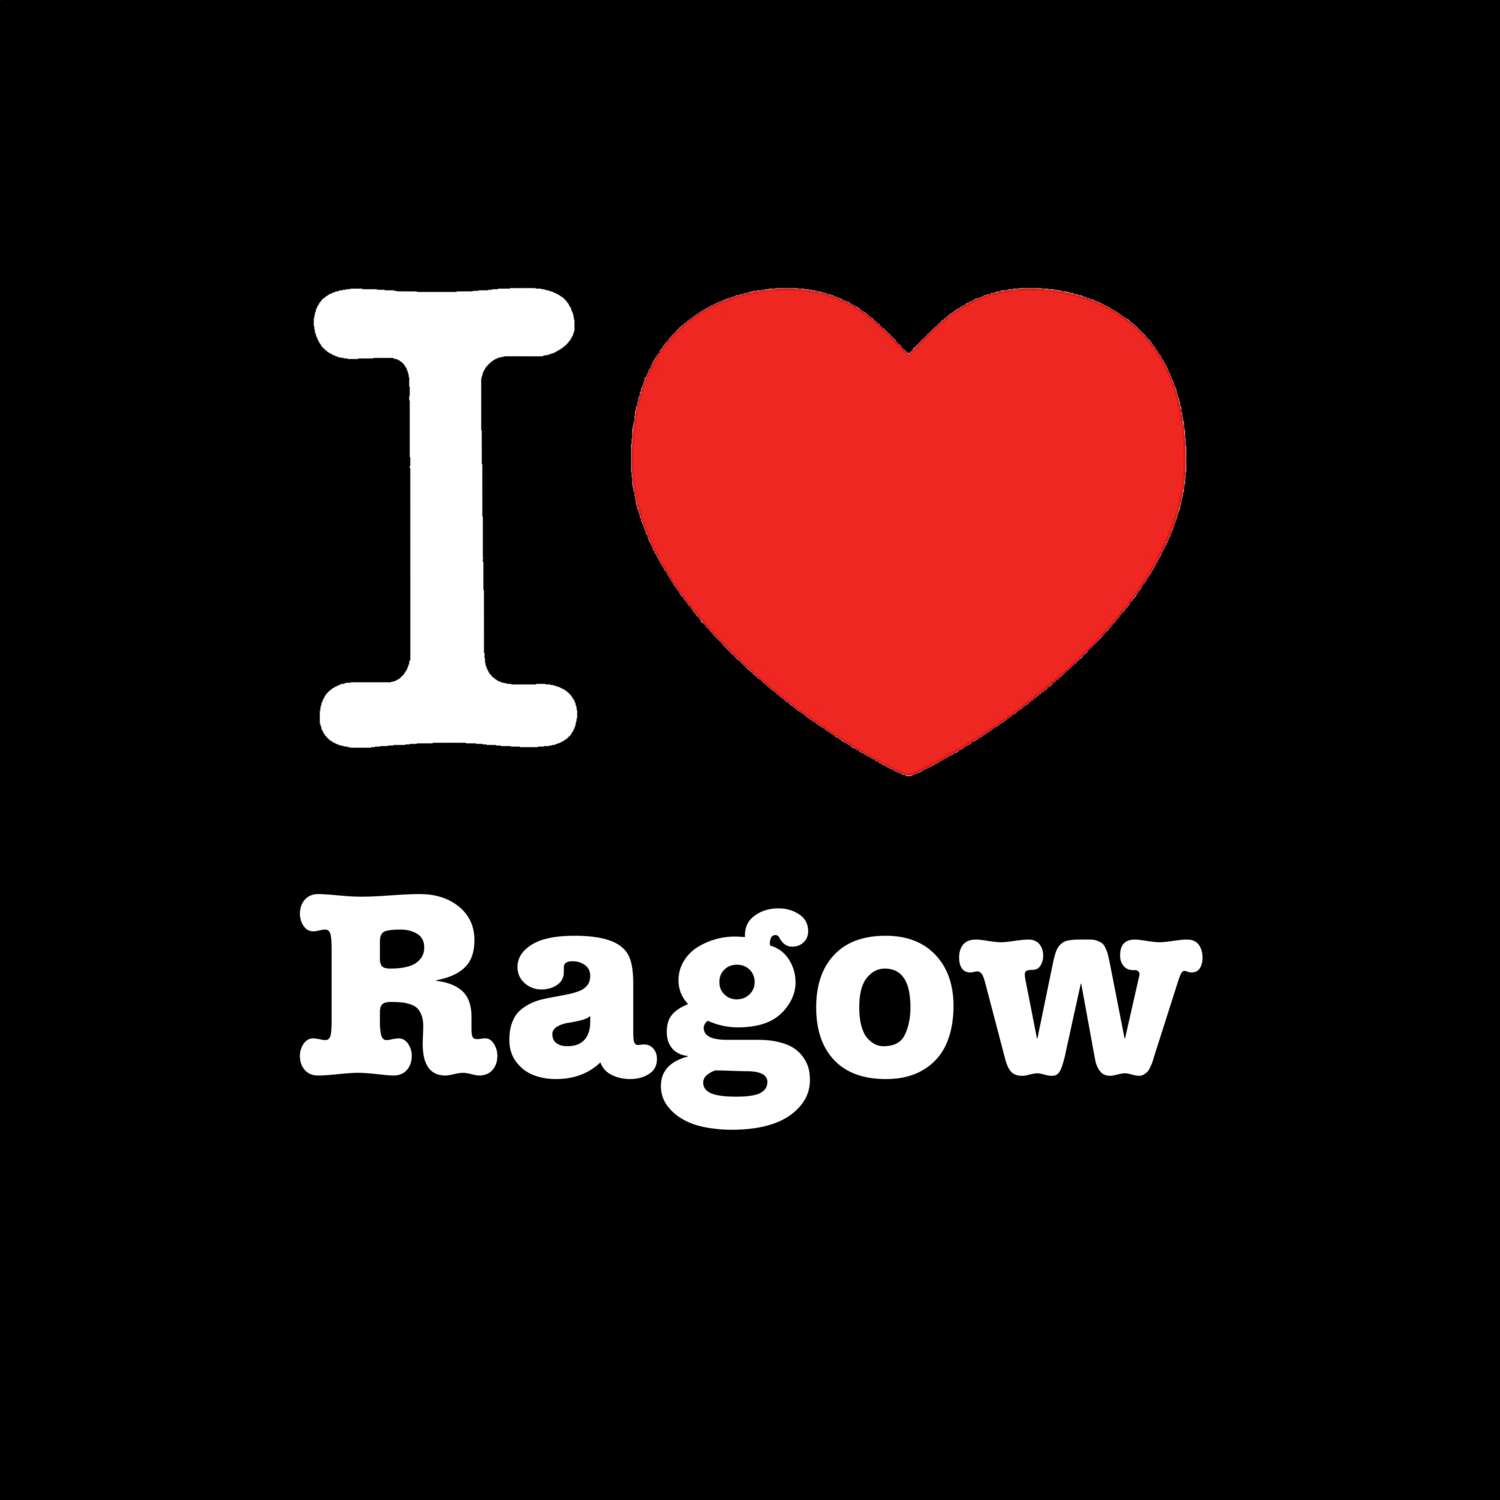 Ragow T-Shirt »I love«